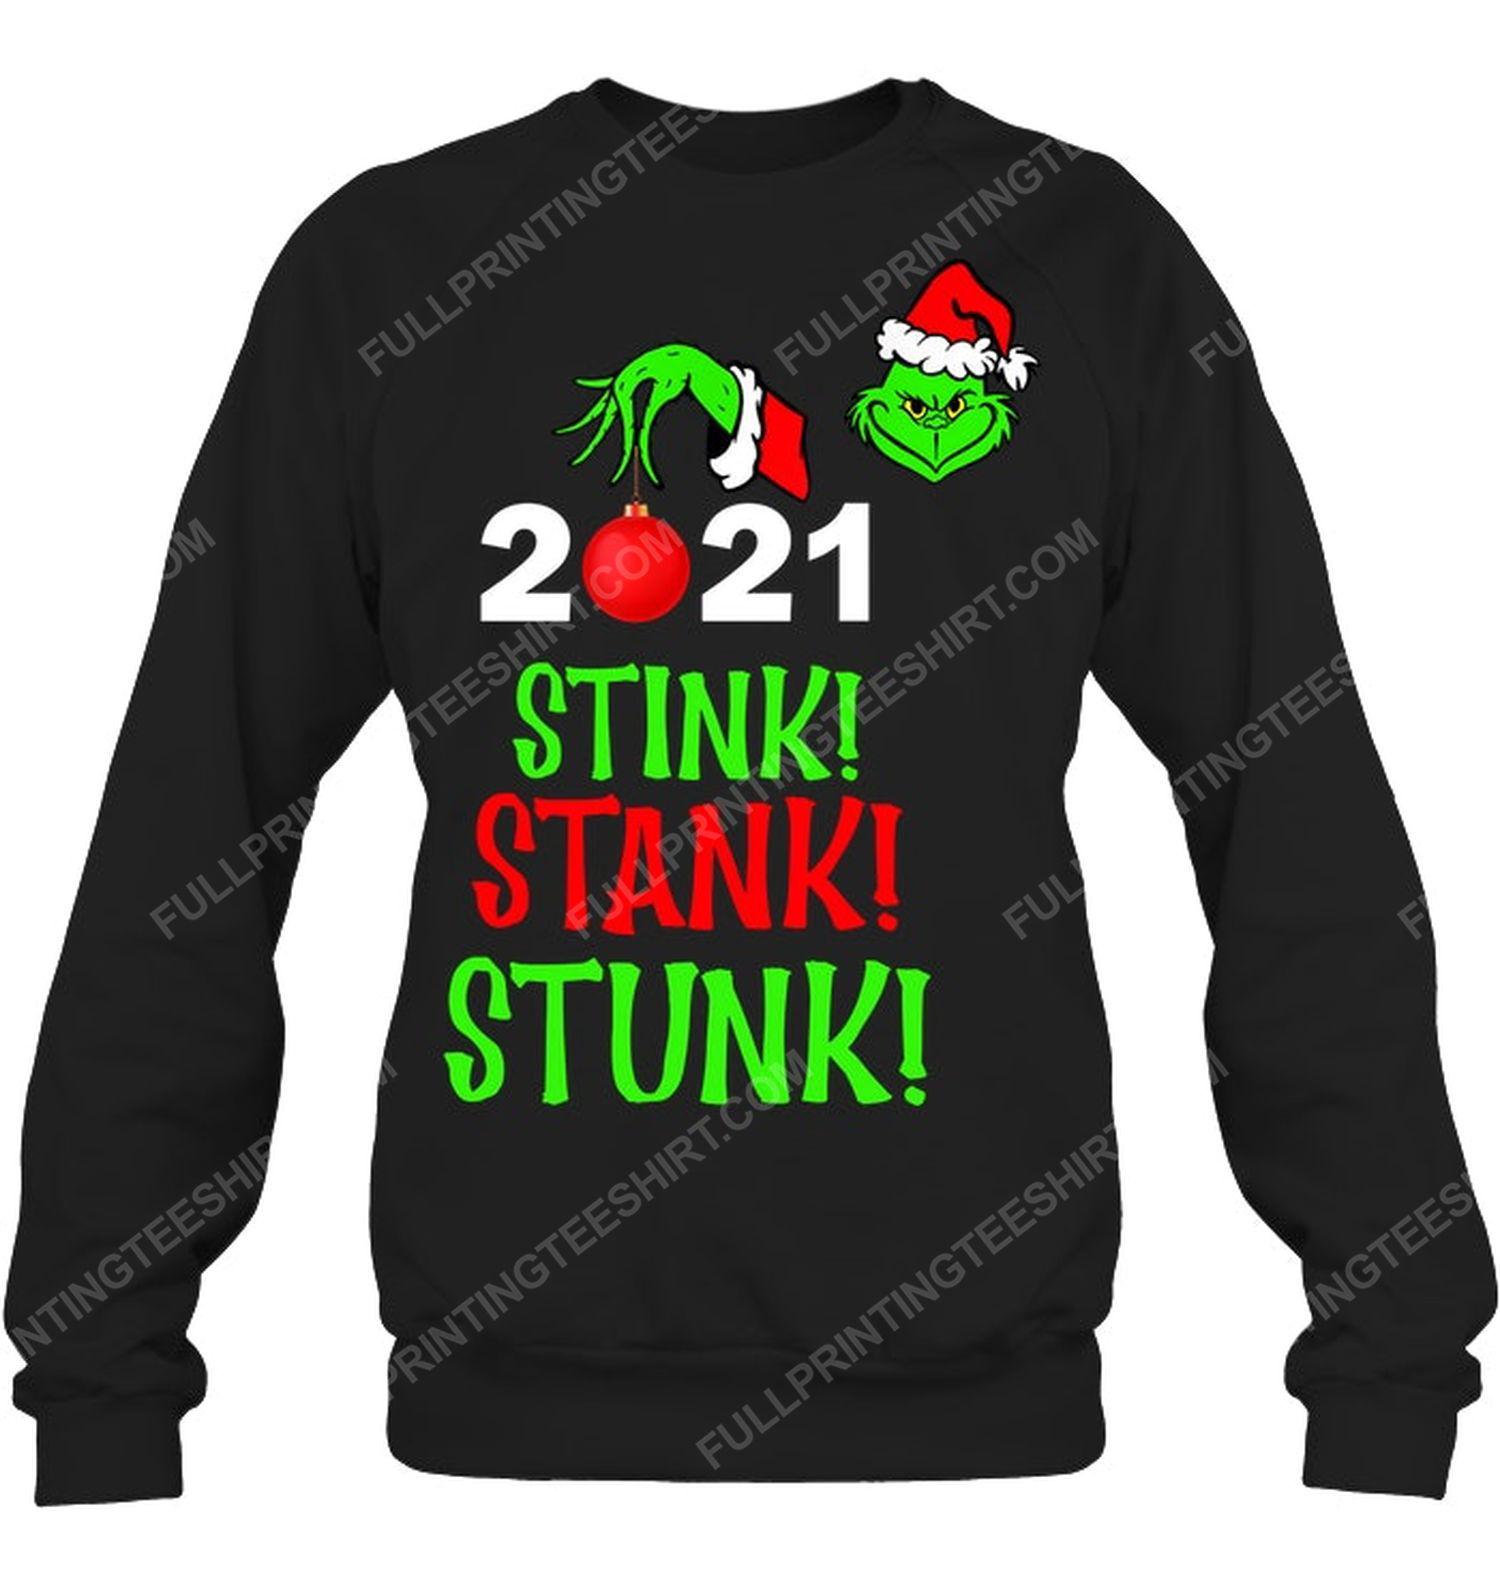 For christmas the grinch stink stank stunk 2021 sweatshirt